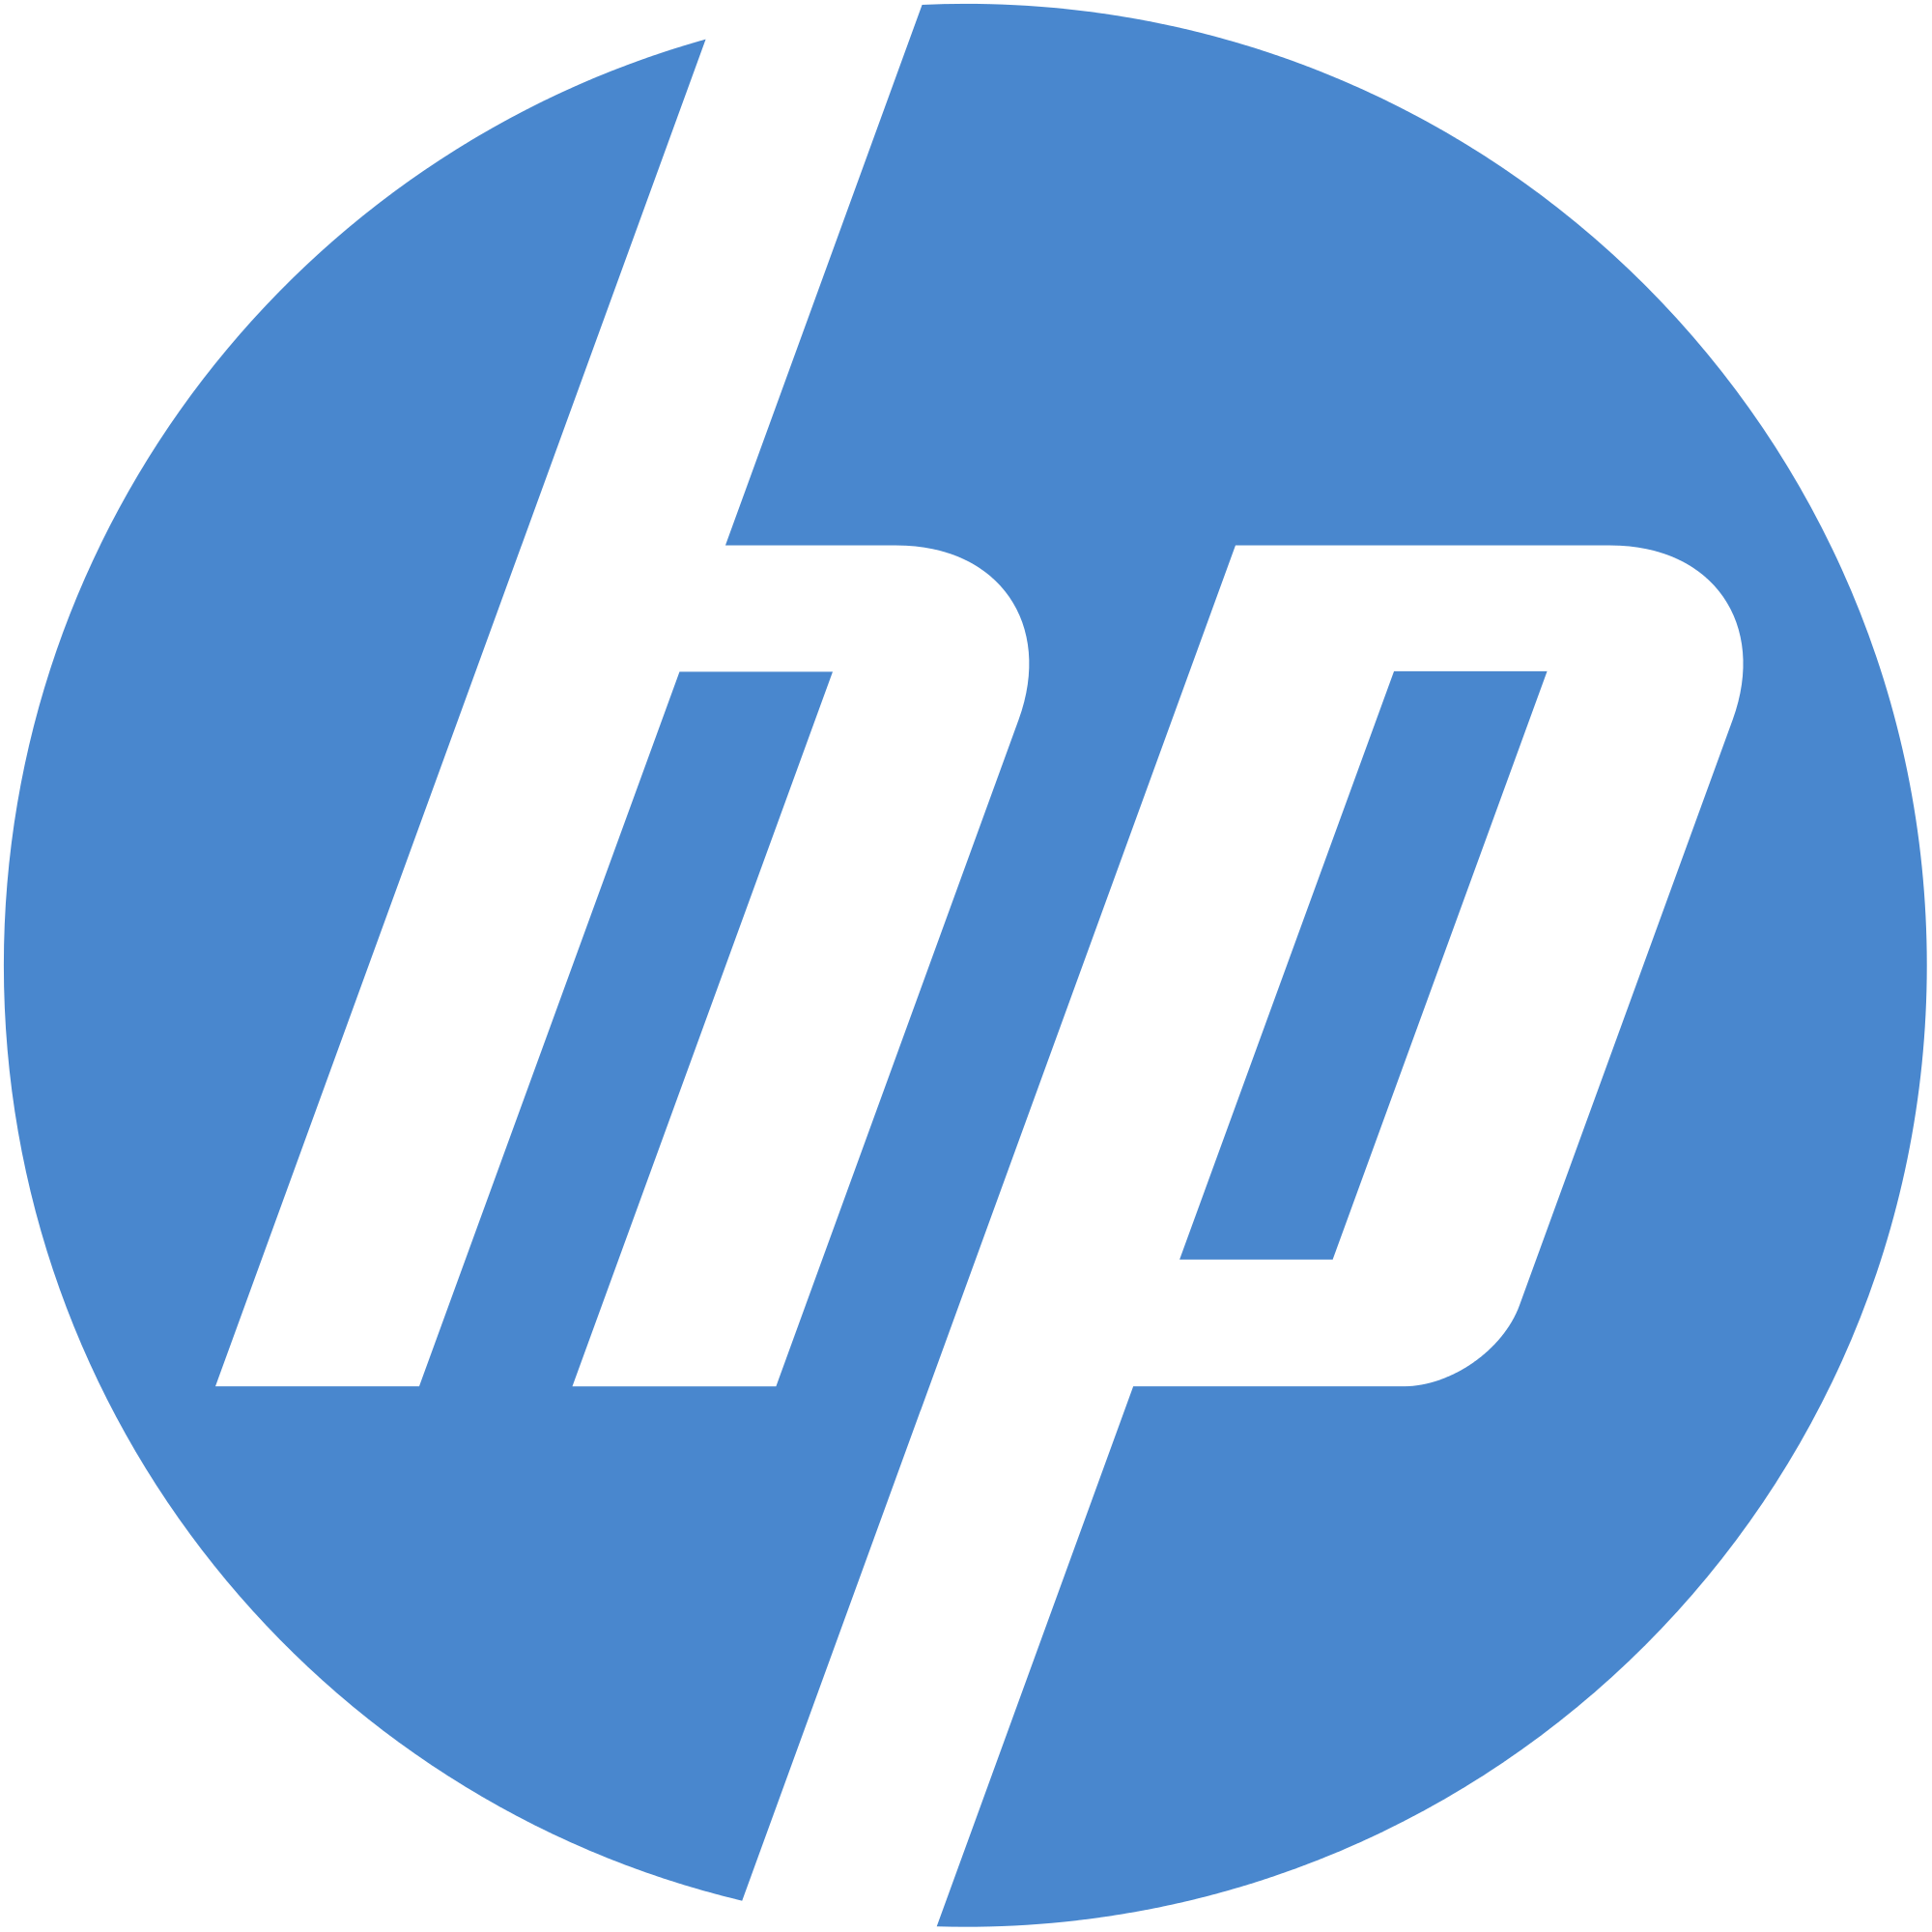 HP_New_Logo_2D.svg.png